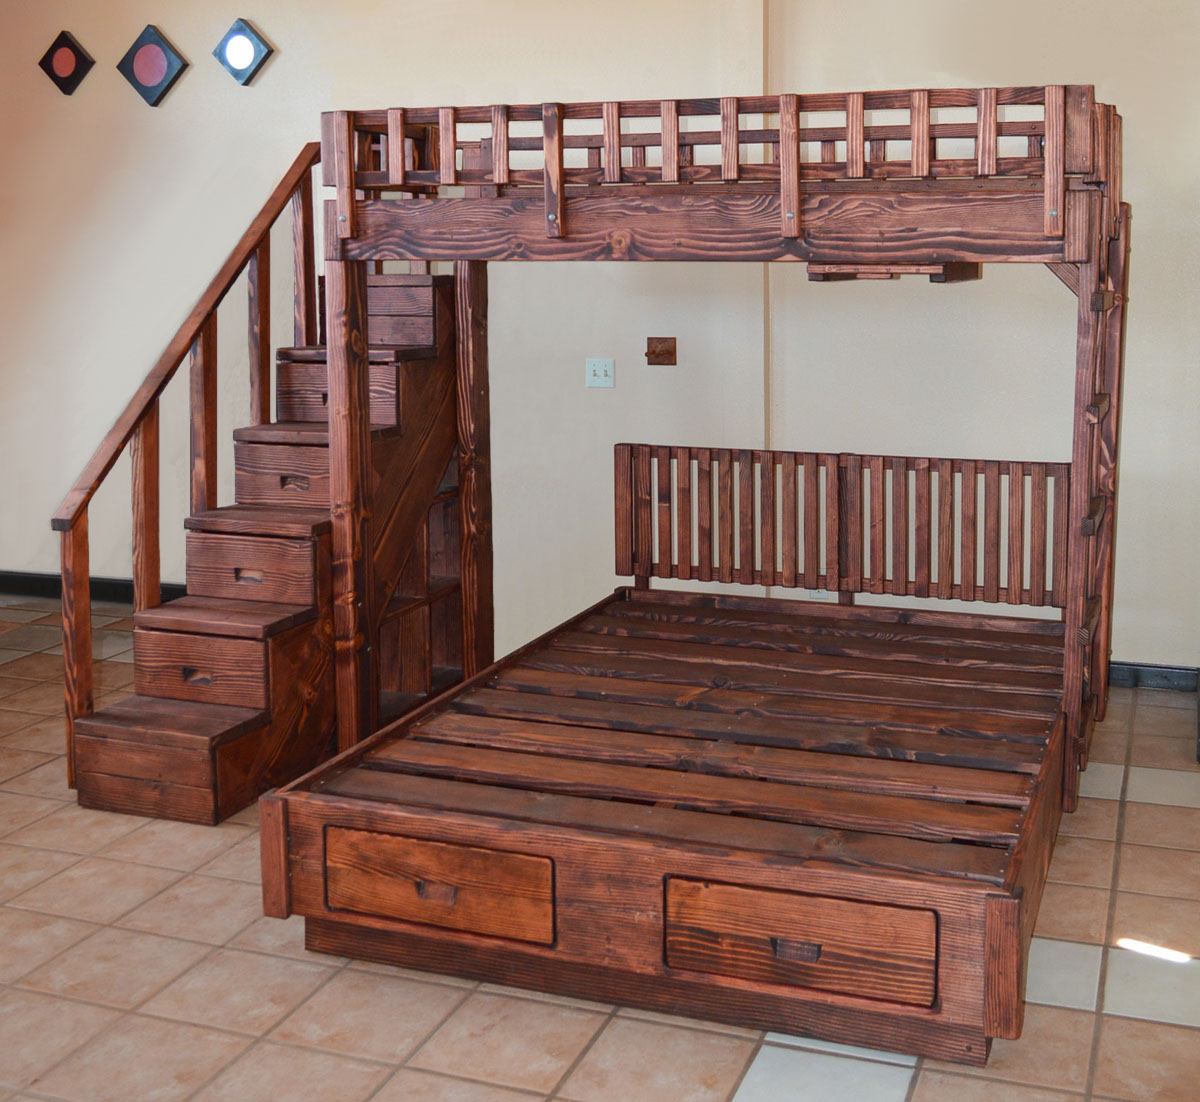 The Stairway Wooden Bunk Beds Forever, Bedz King Stairway Bunk Bed